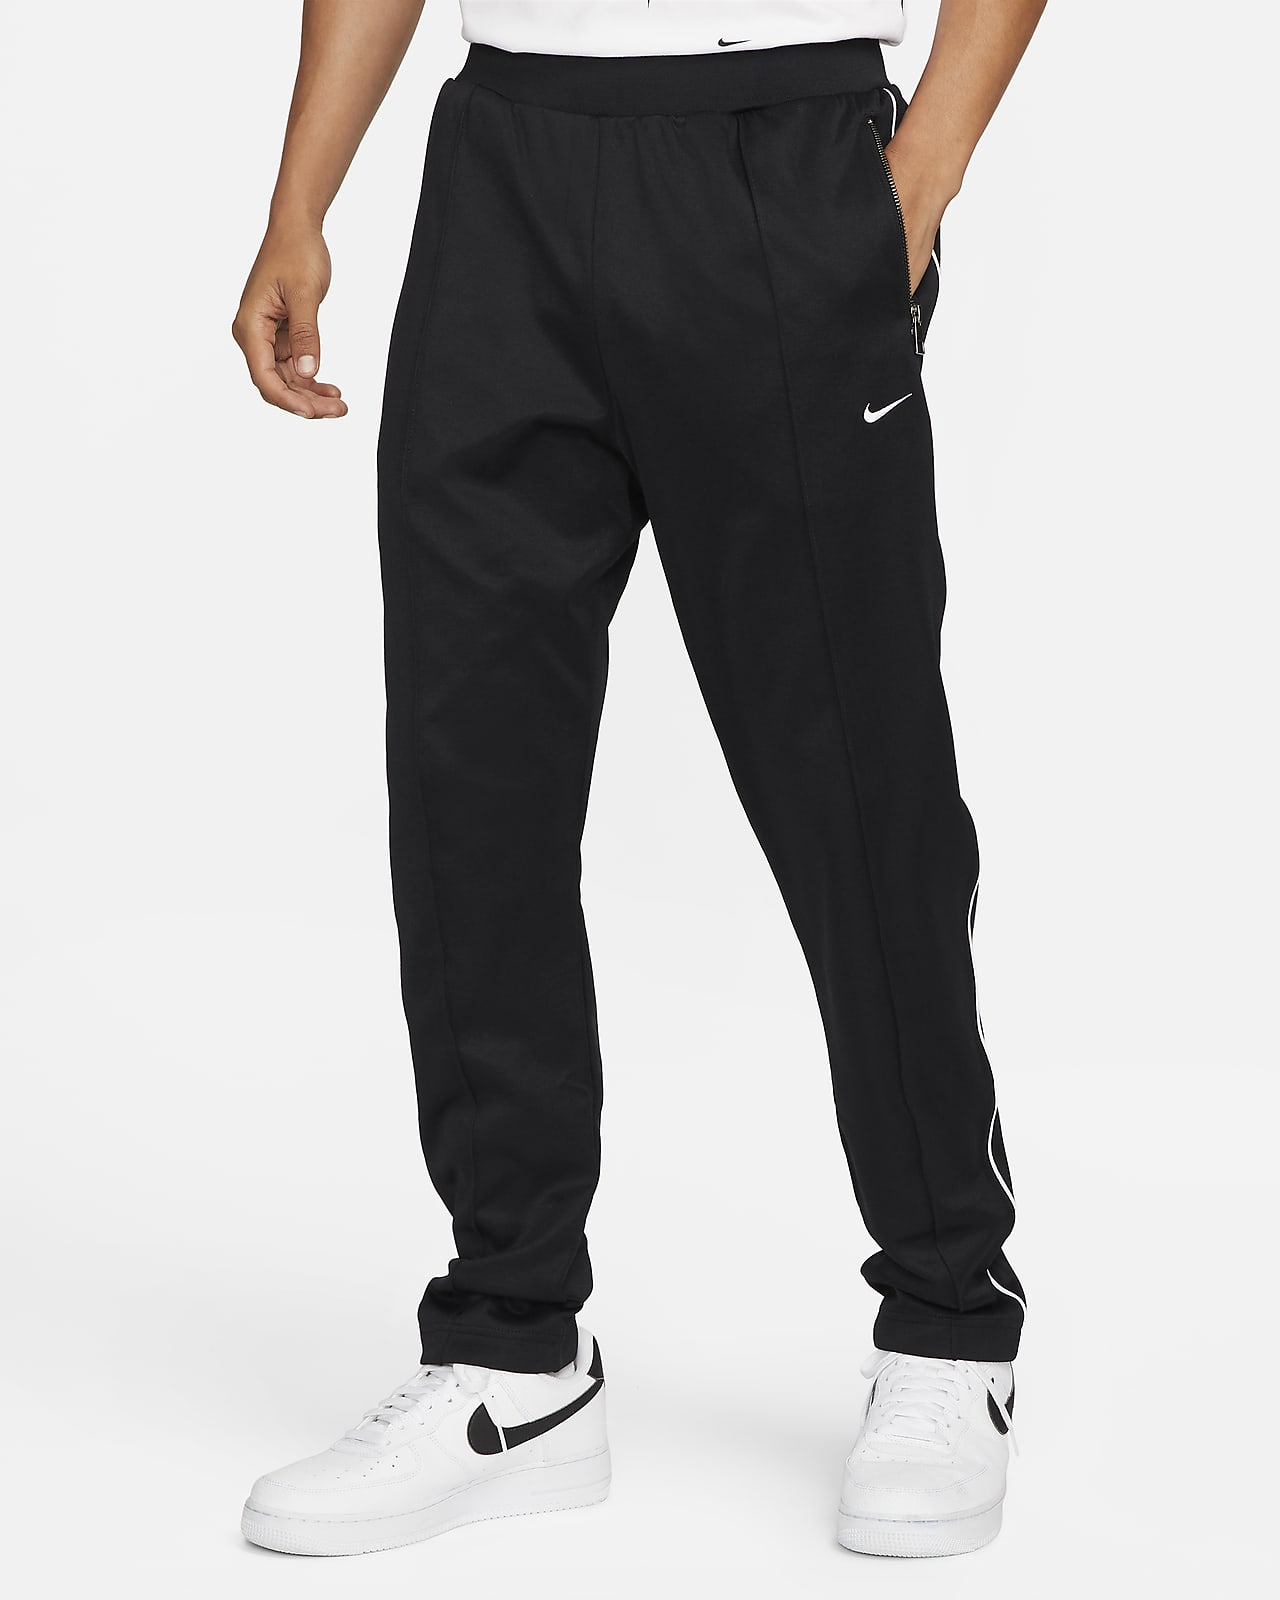 Jolly karakter Dalset Nike Sportswear Authentics Men's Tracksuit Bottoms. Nike LU